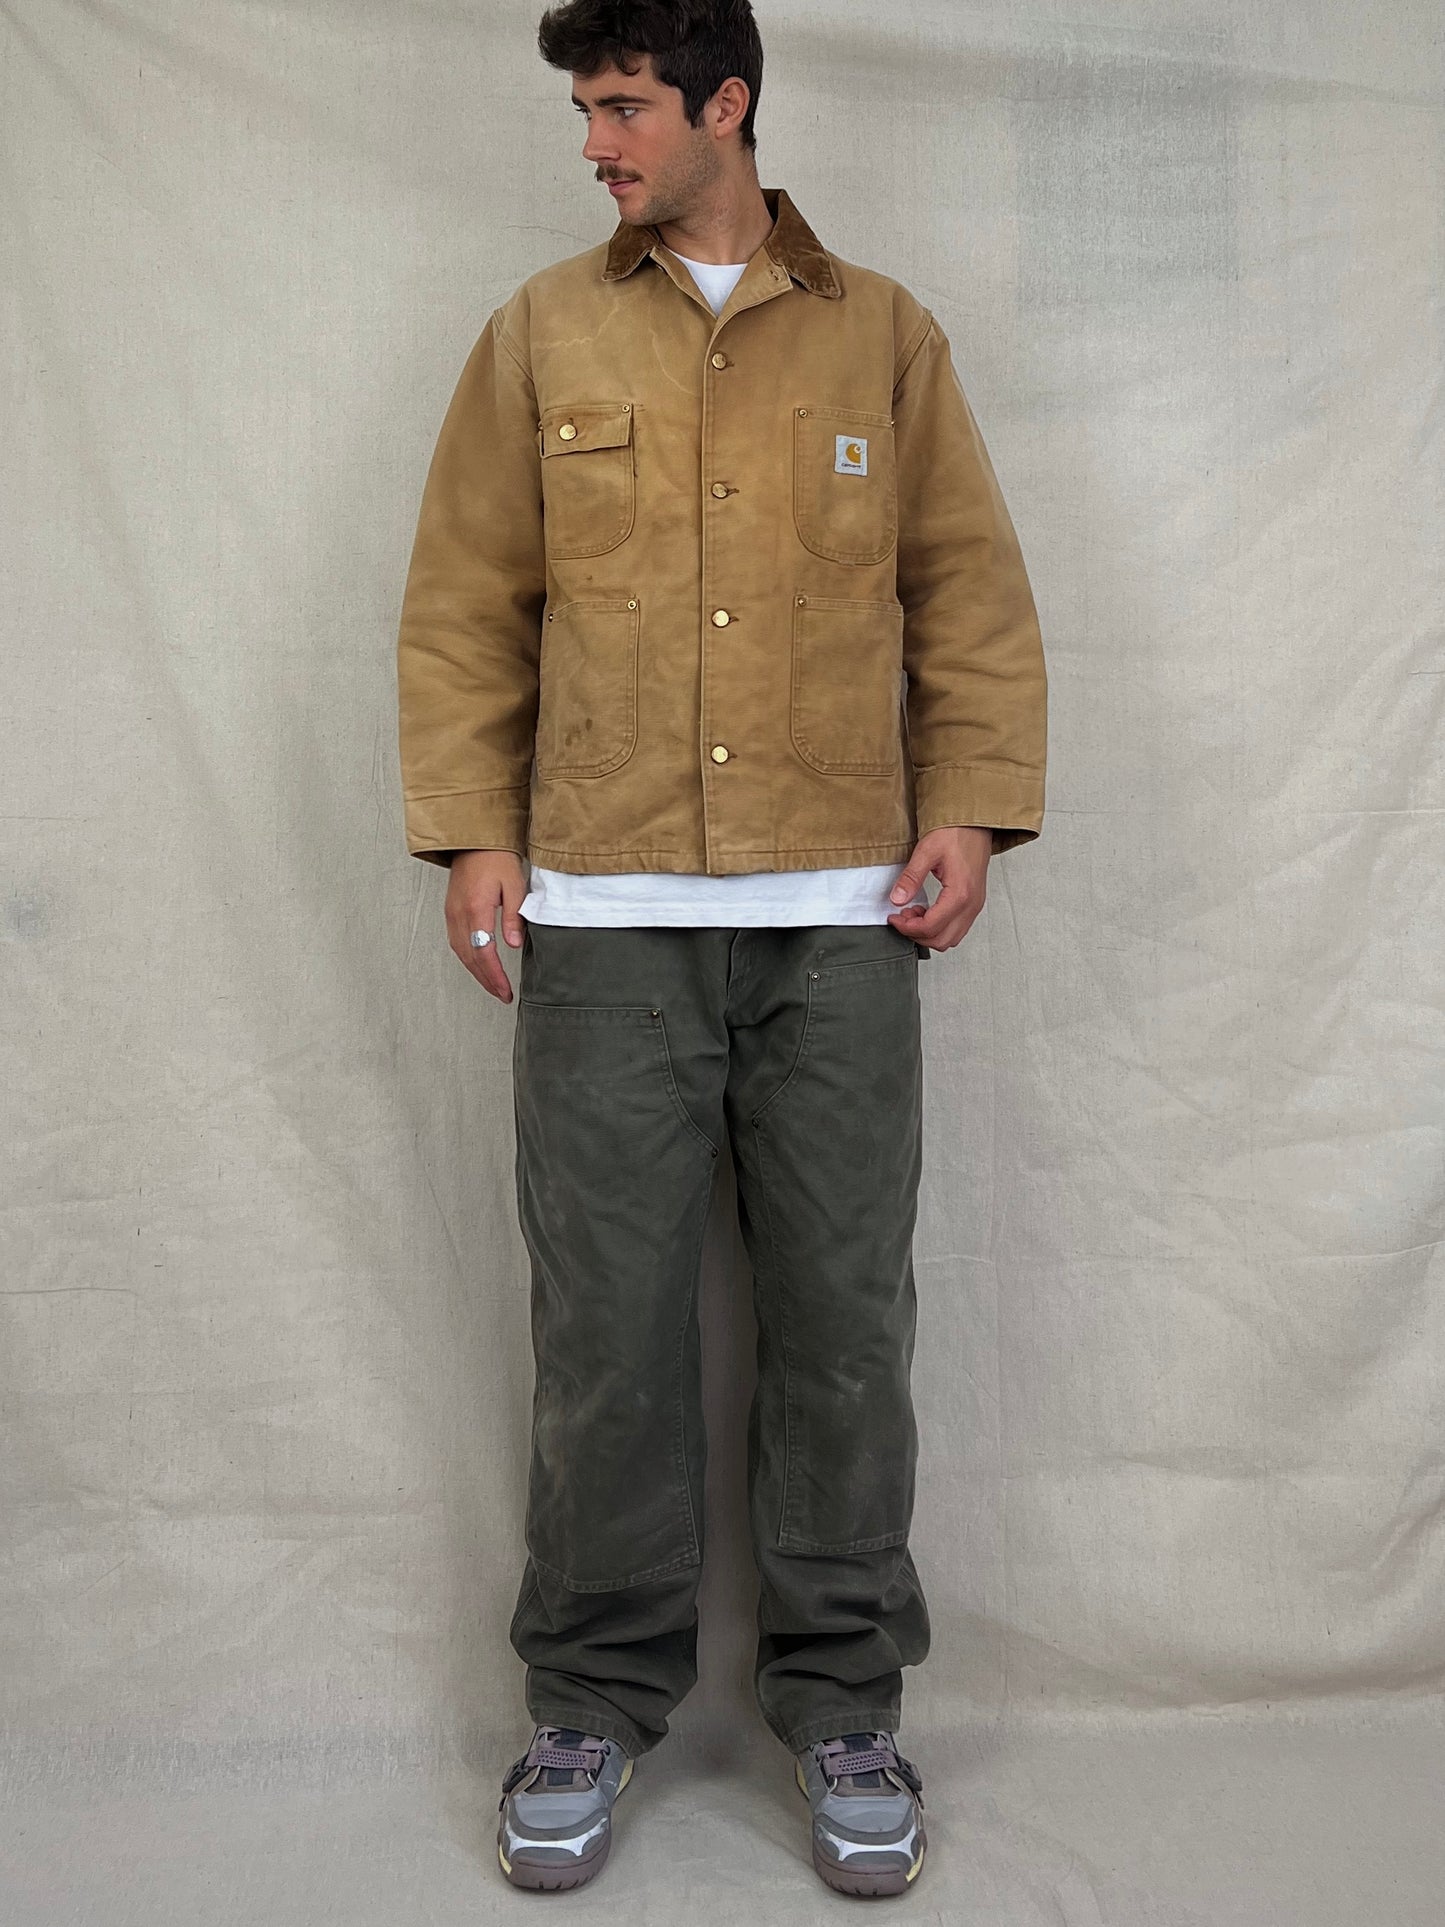 90's Carhartt Heavy Duty Lined Vintage Corduroy Collar Jacket Size L